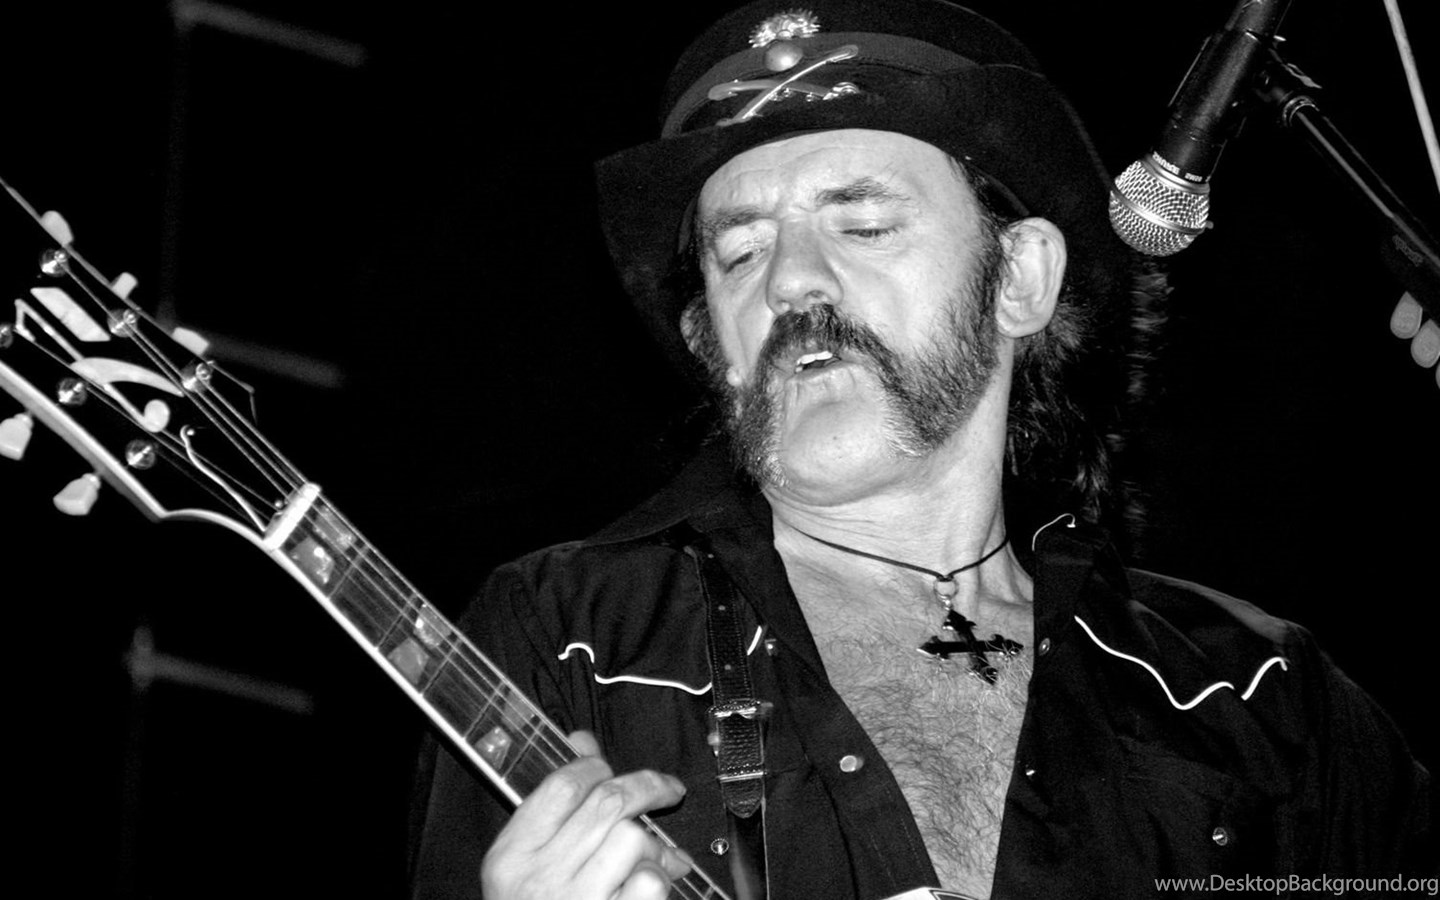 Lemmy Kilmister from Motörhead in 10 songs